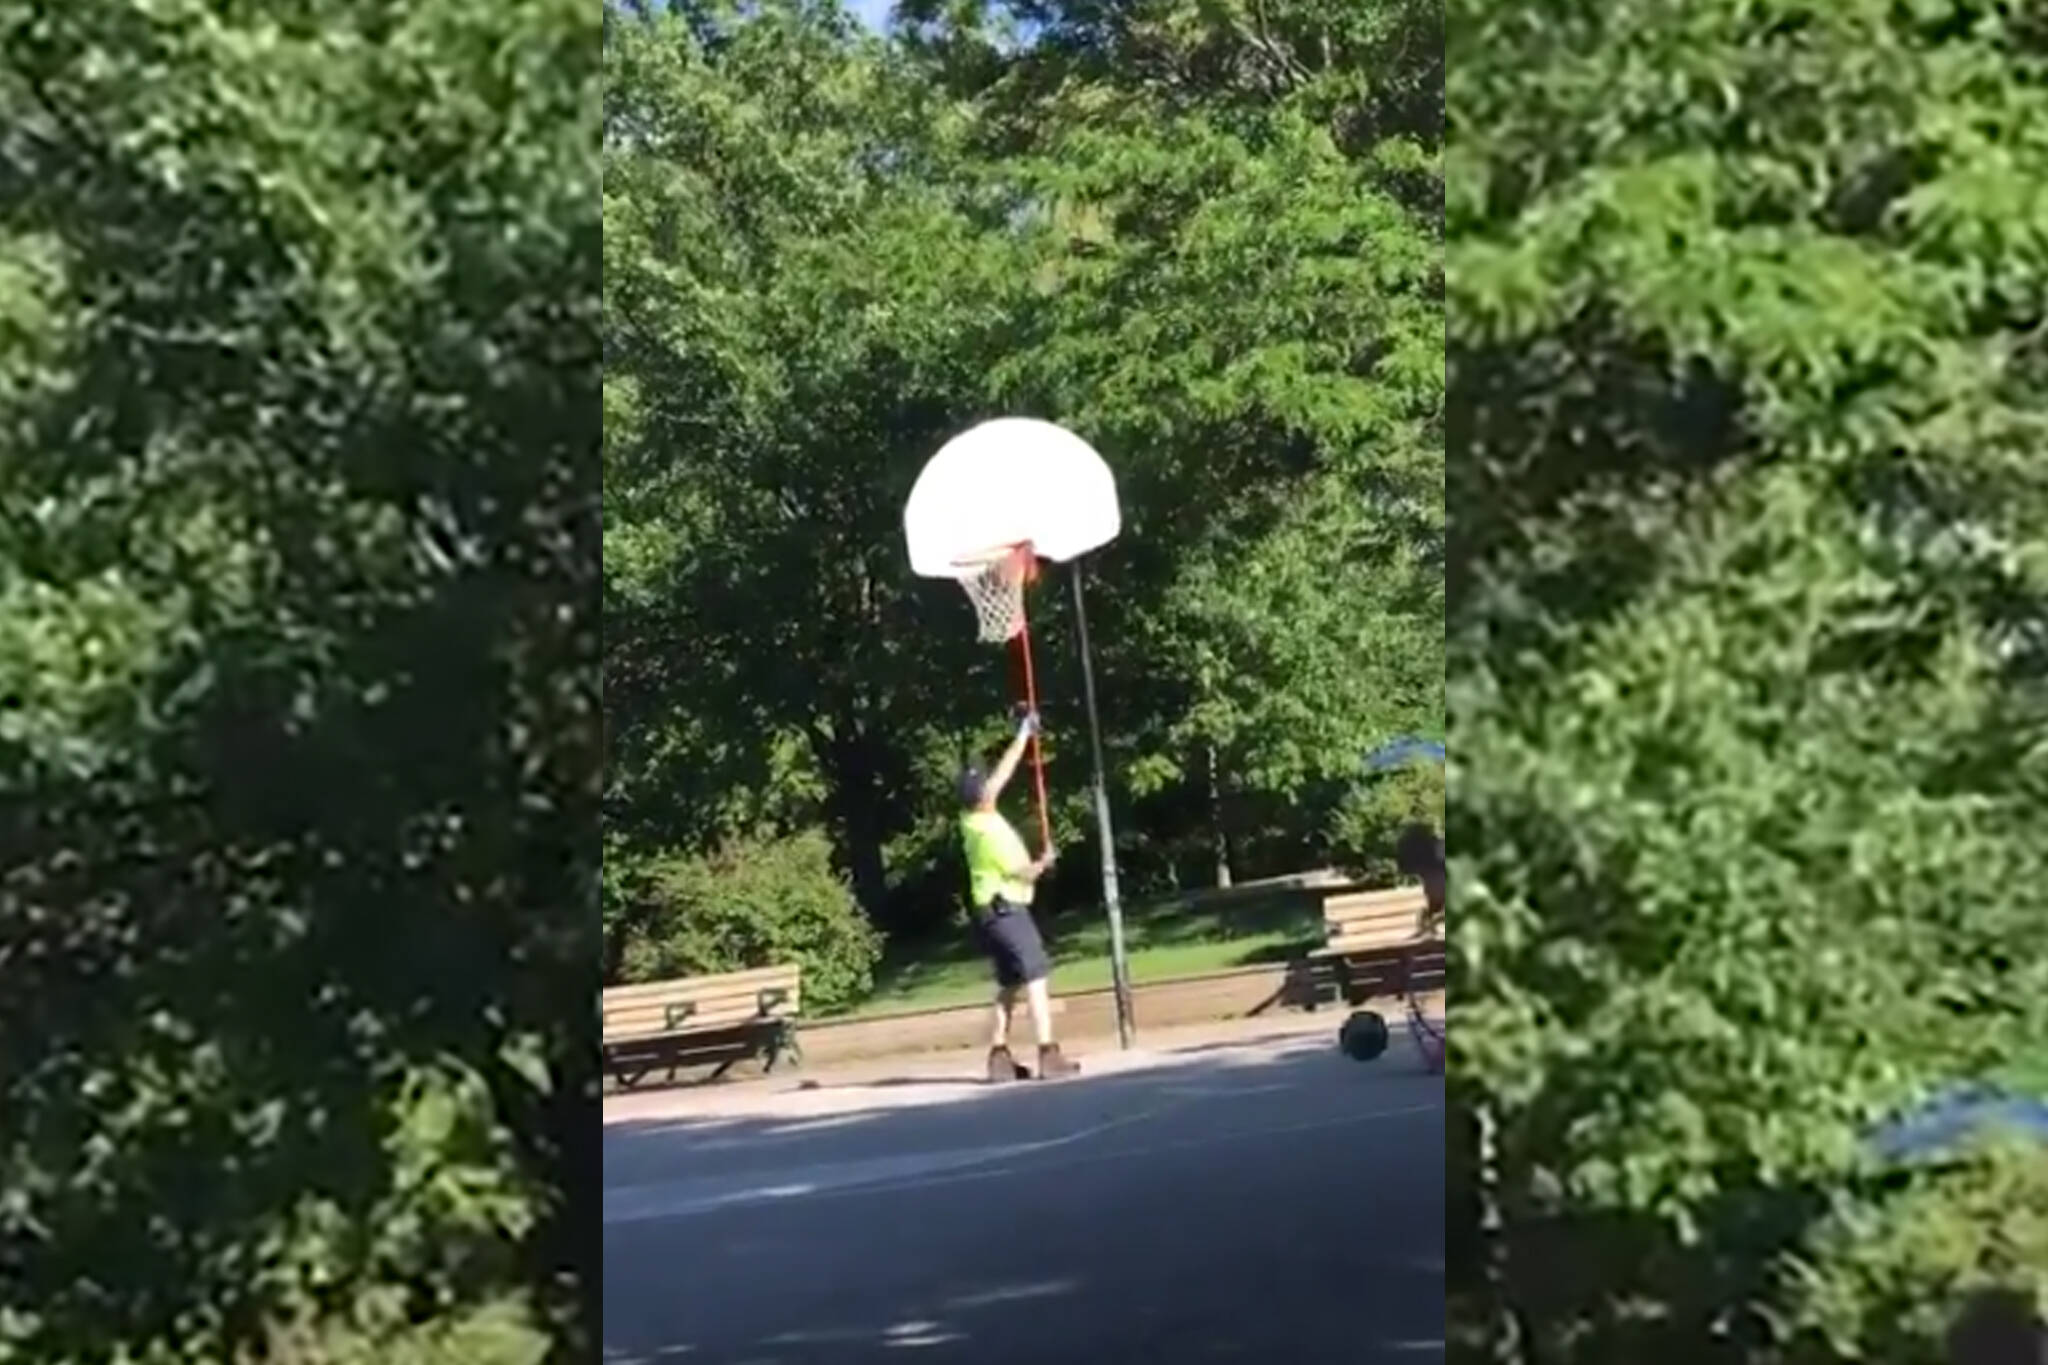 basketball nets